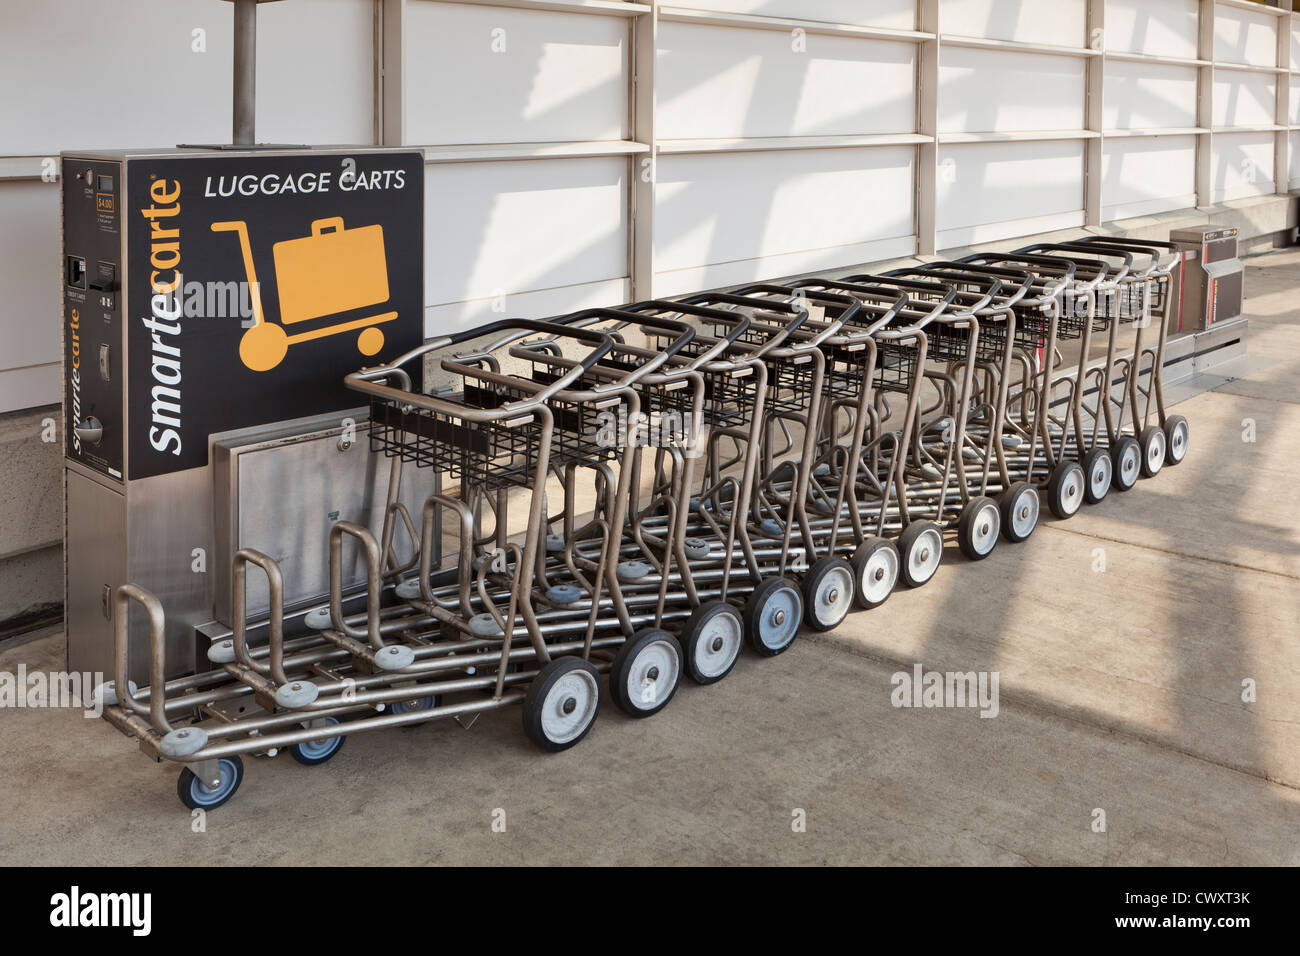 Smartecarte luggage cart dispenser Stock Photo